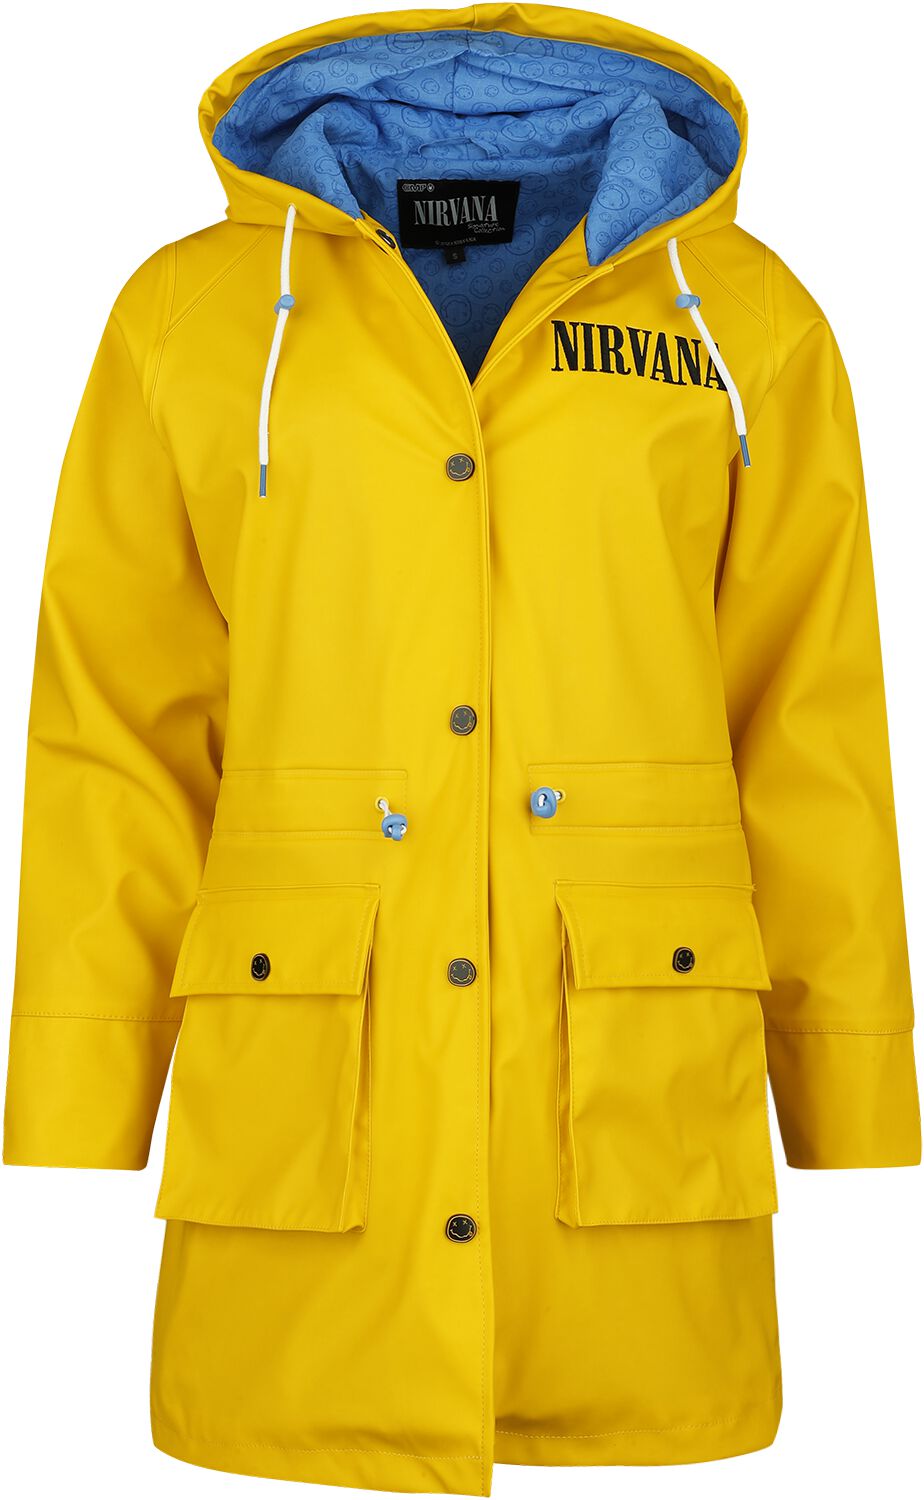 Nirvana EMP Signature Collection Regenmantel gelb in XXL